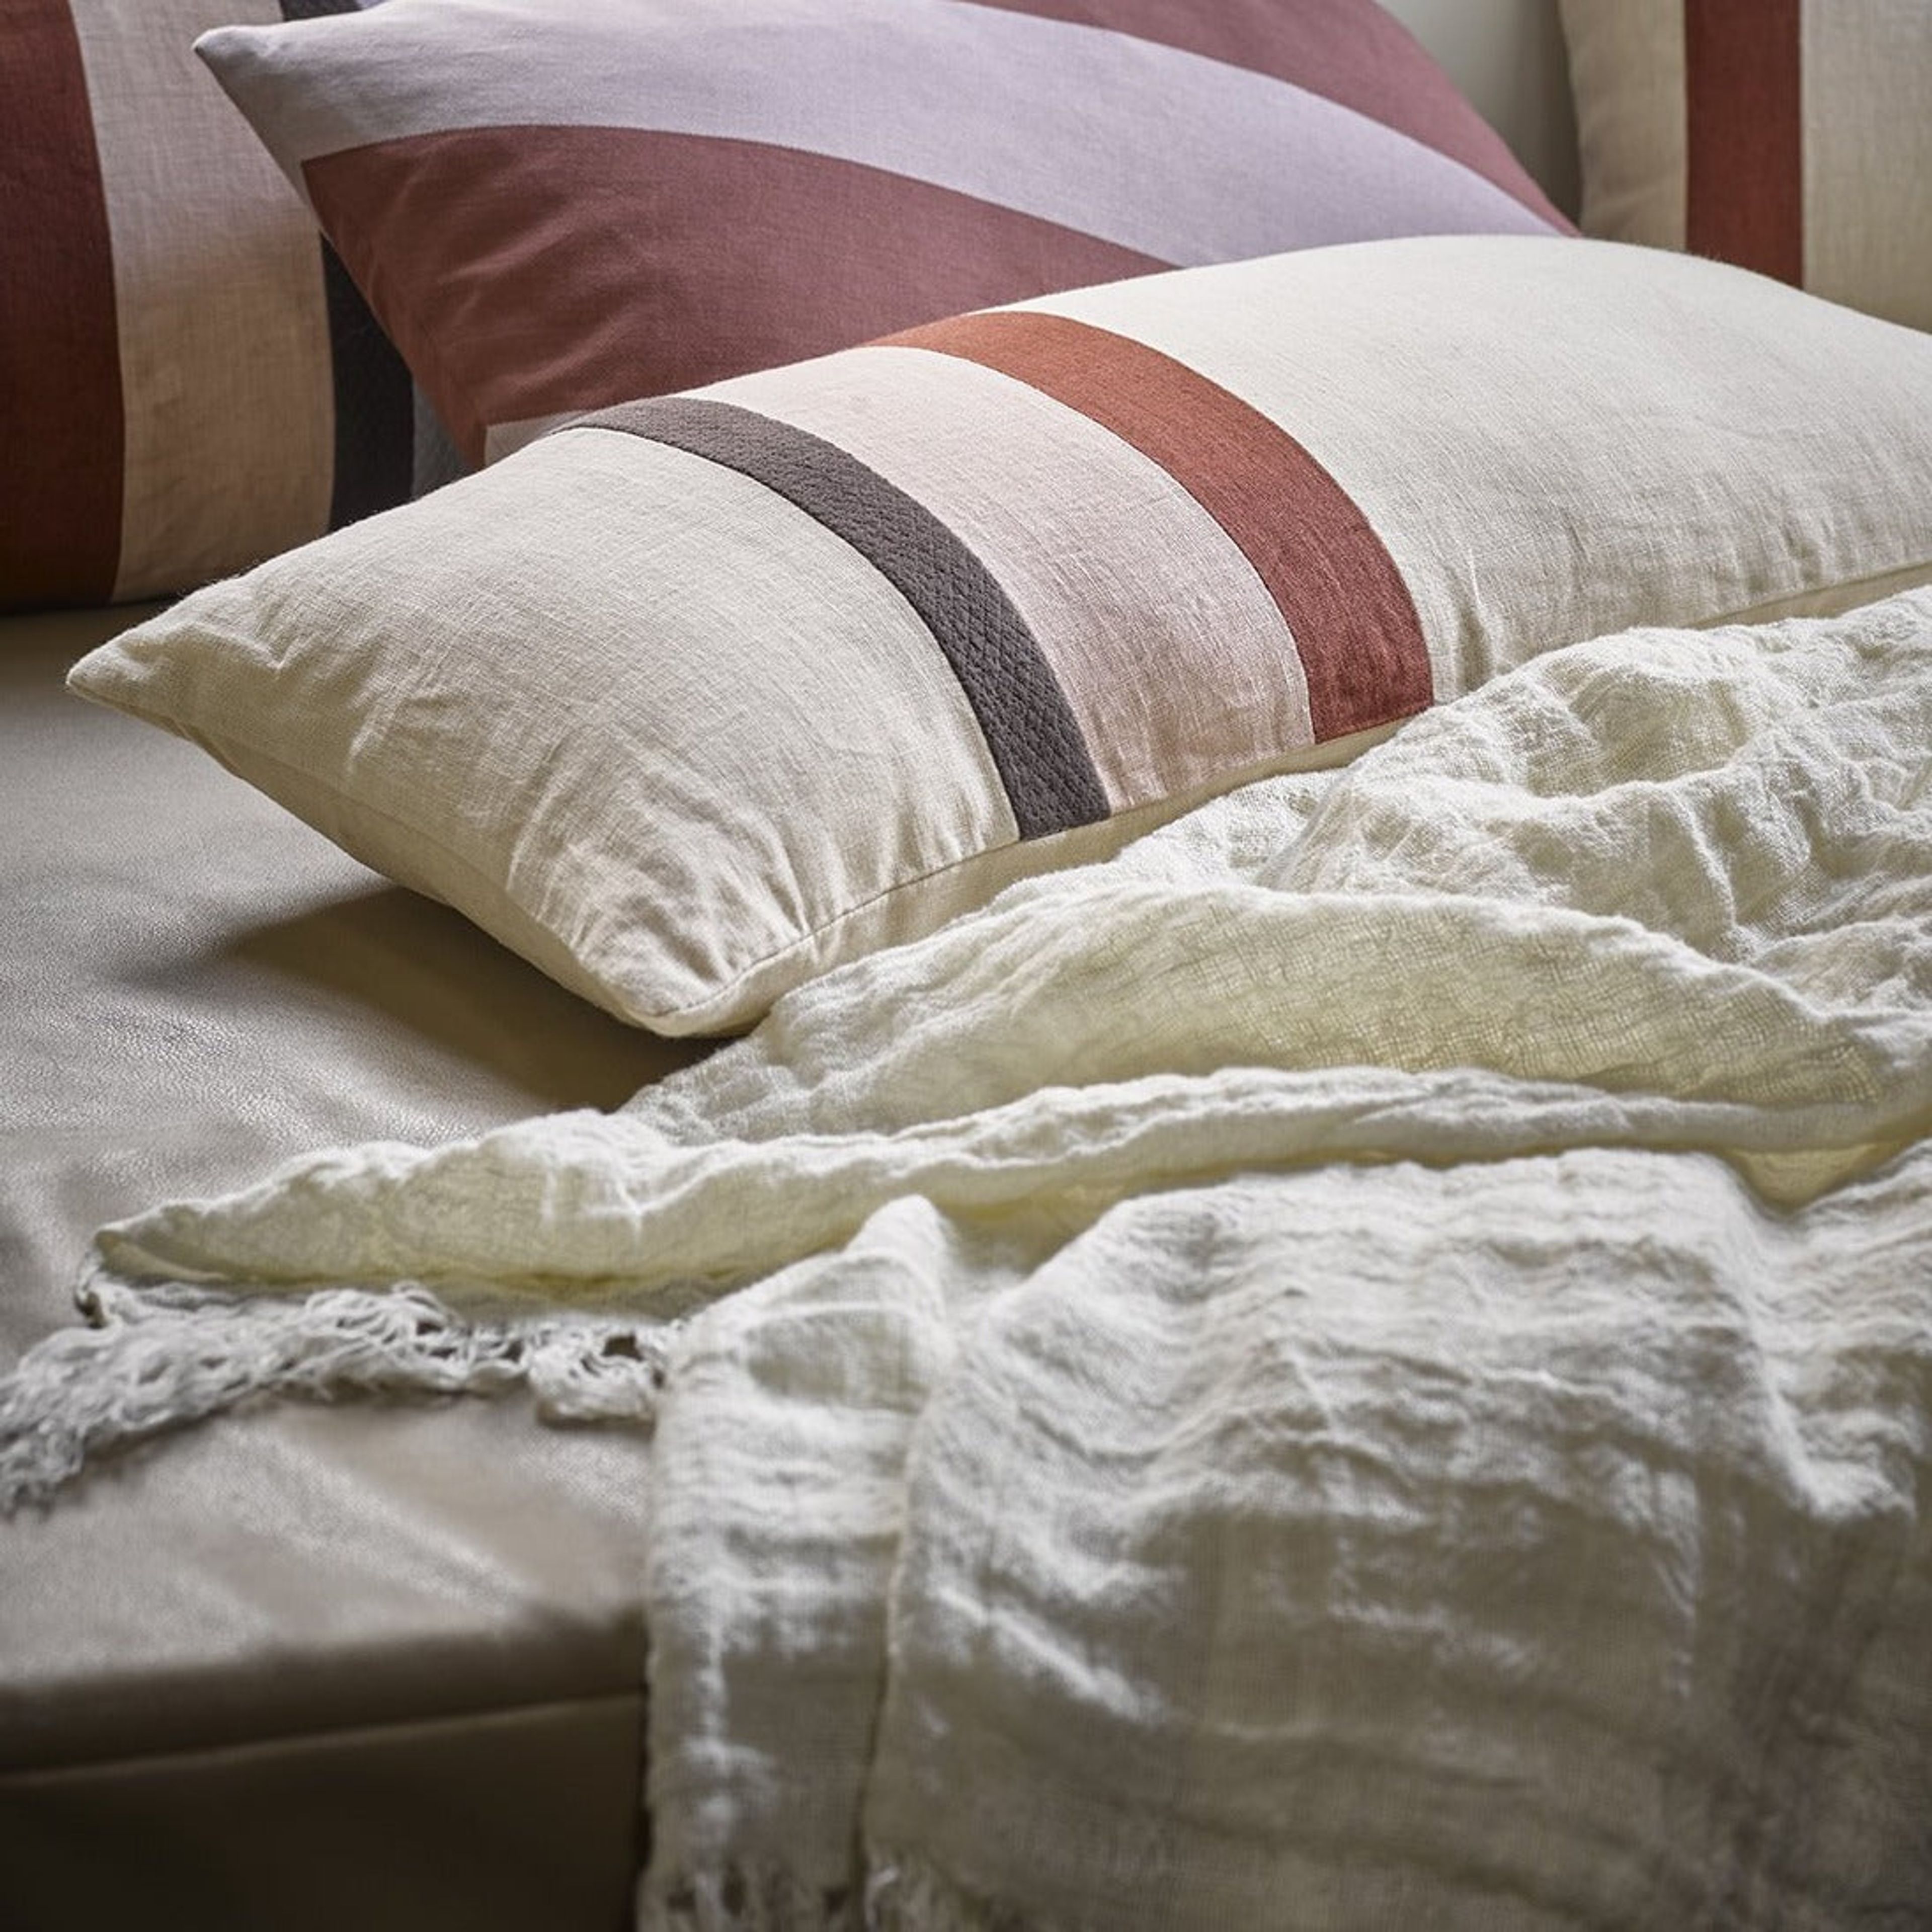 Bedspread - white linen